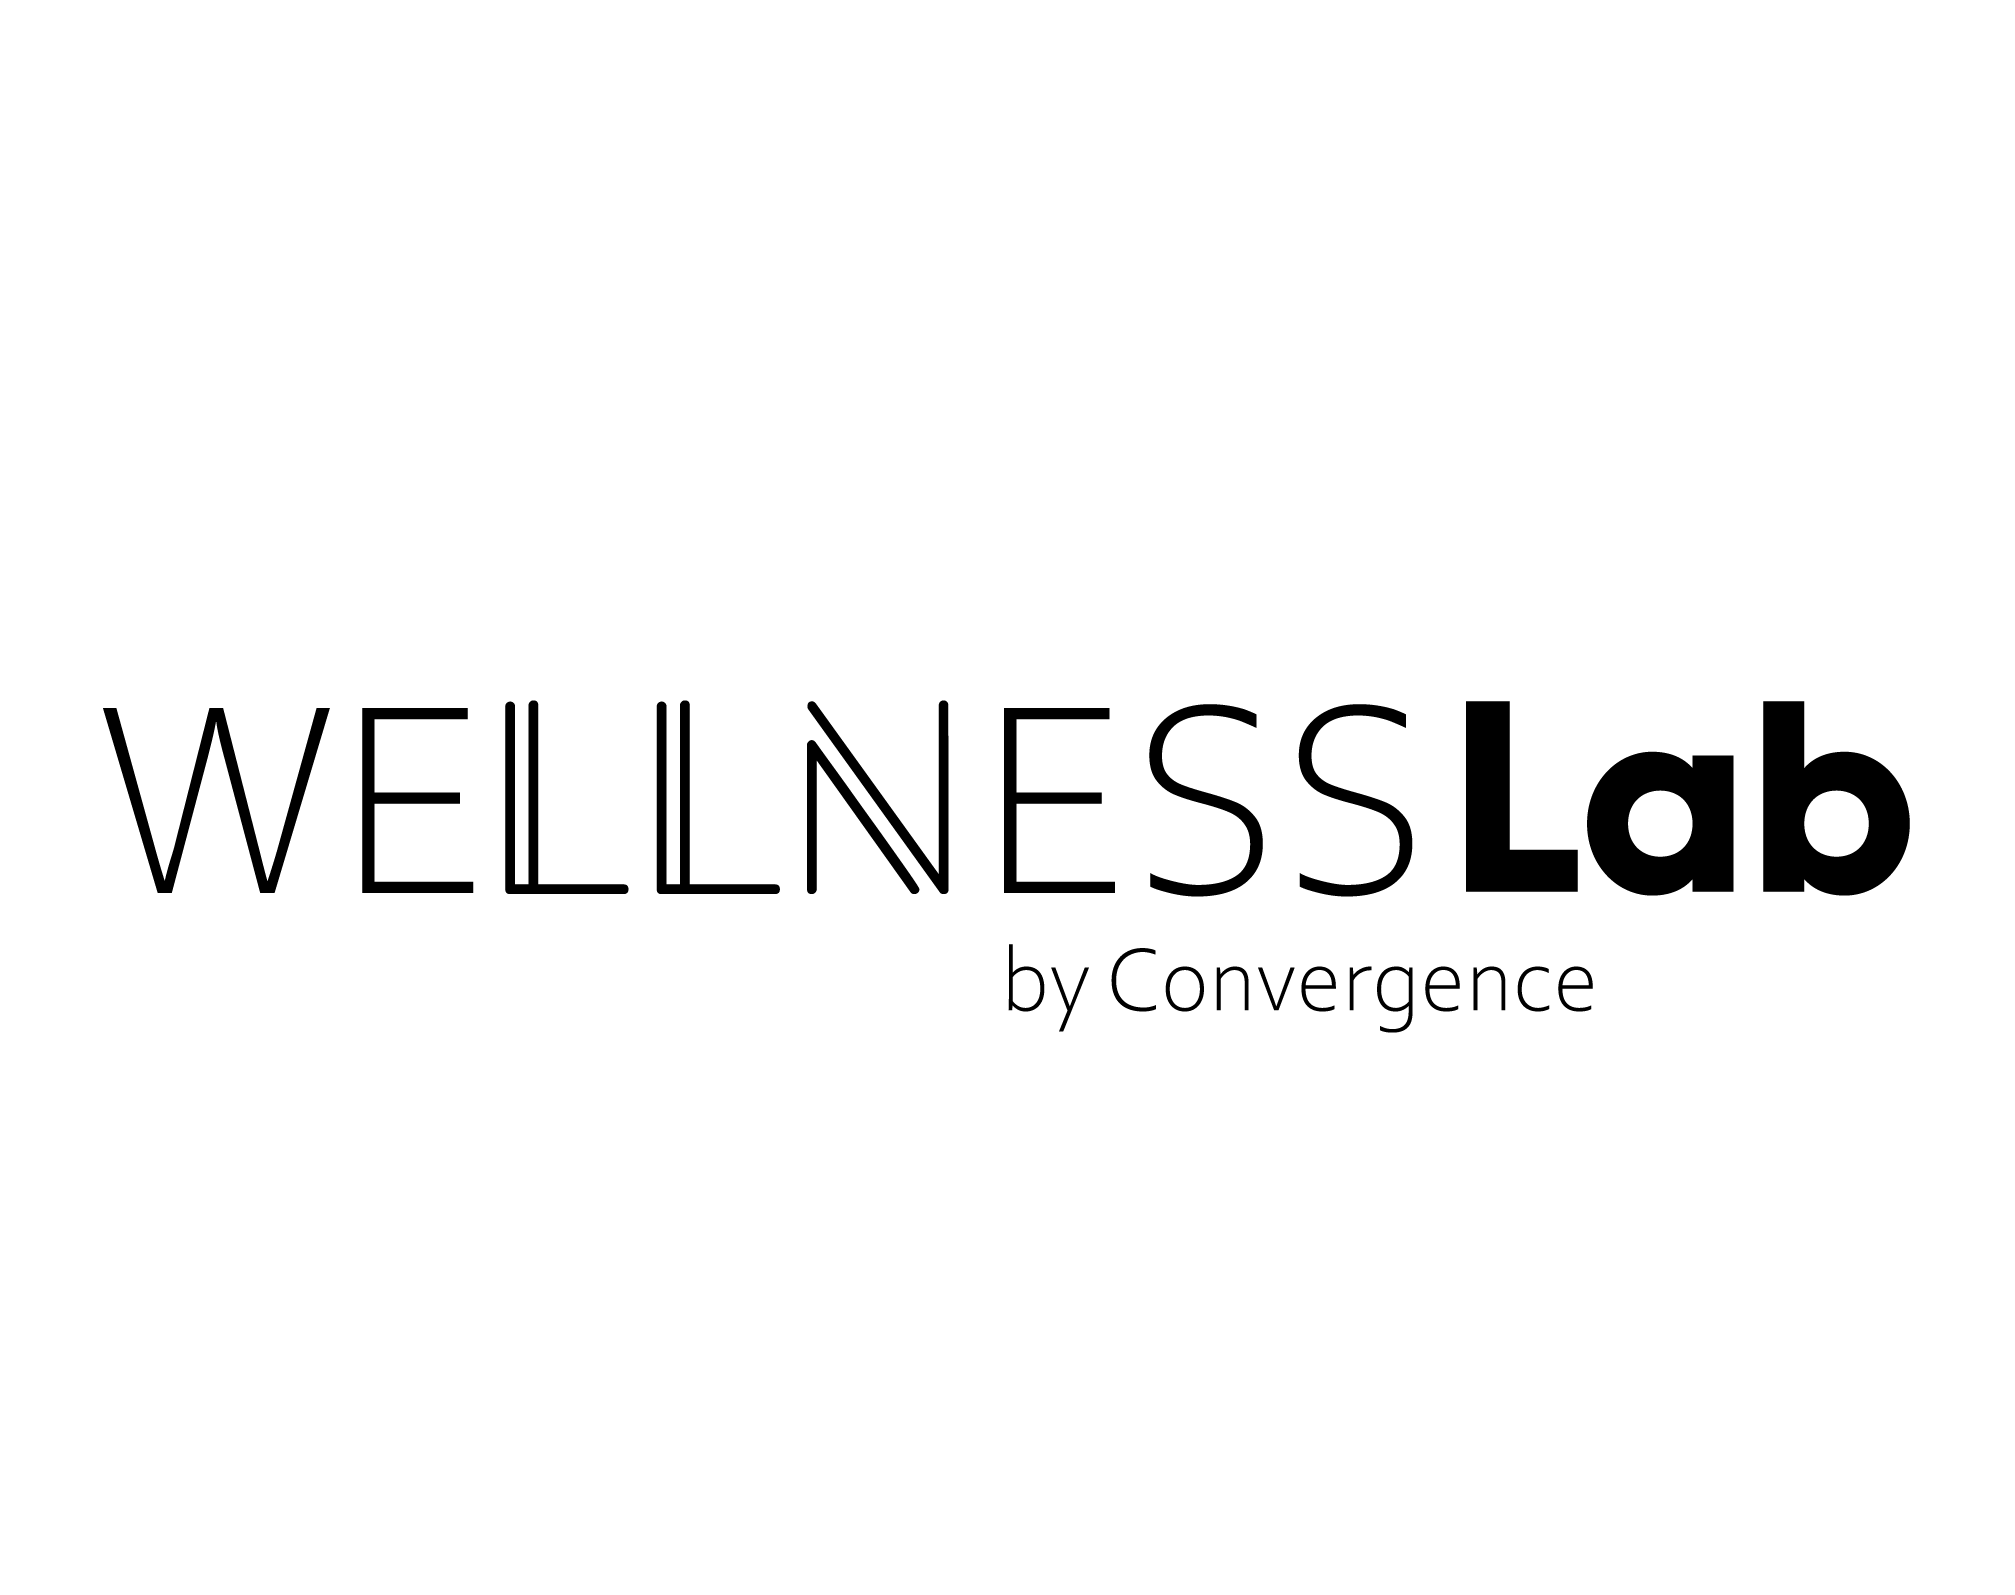 Wellnesslab by convergence